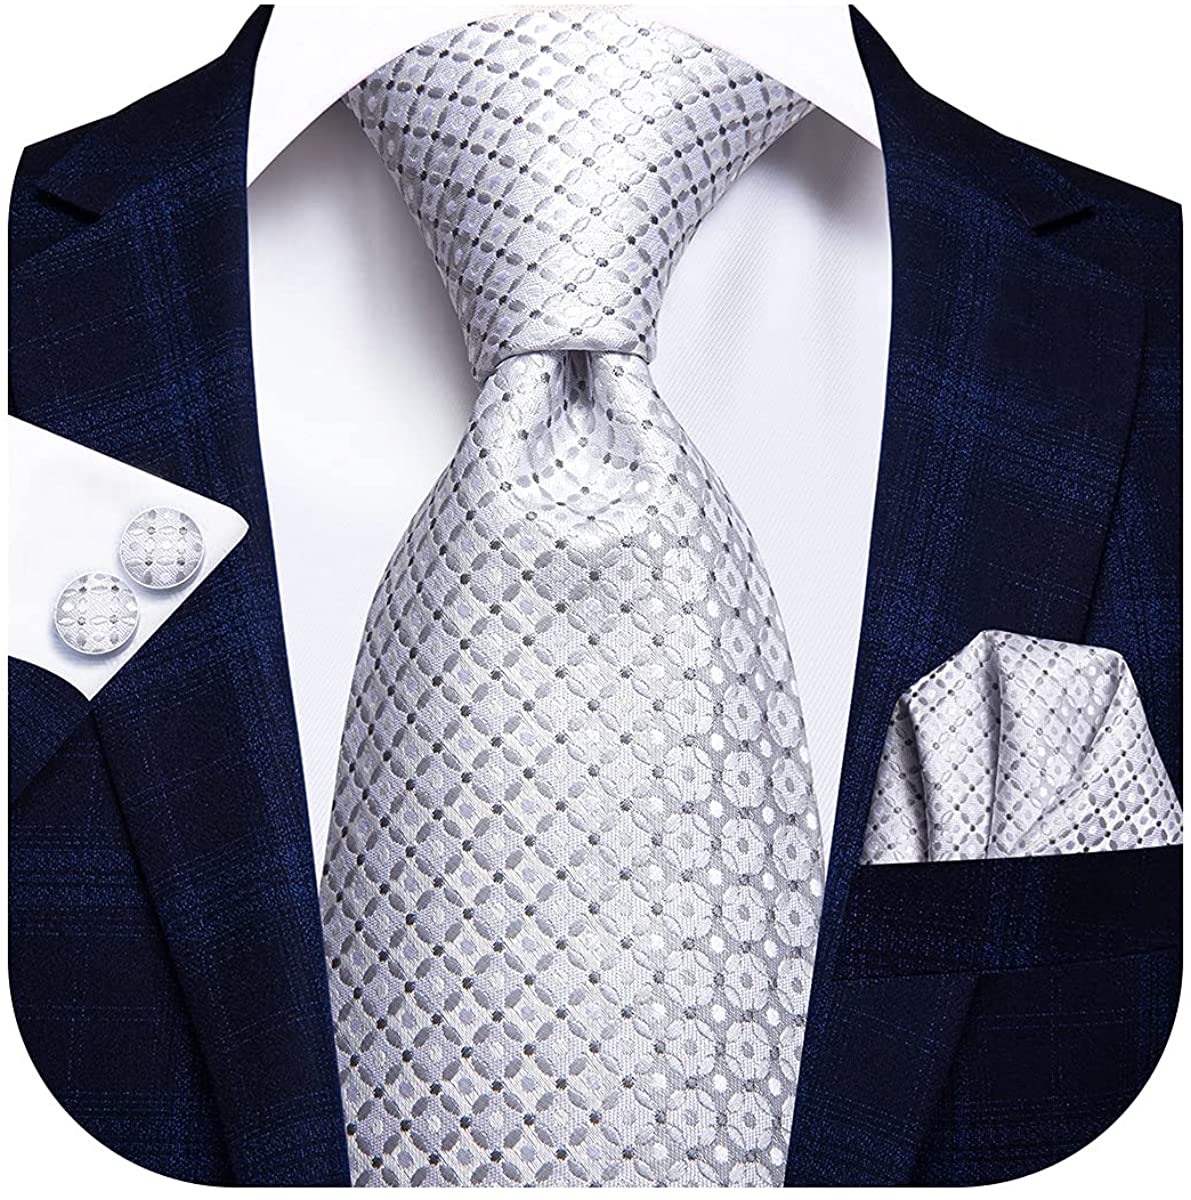 DQT Woven Tartan Plaid Formal Necktie Wedding Classic Men's Tie Handkerchief Set 